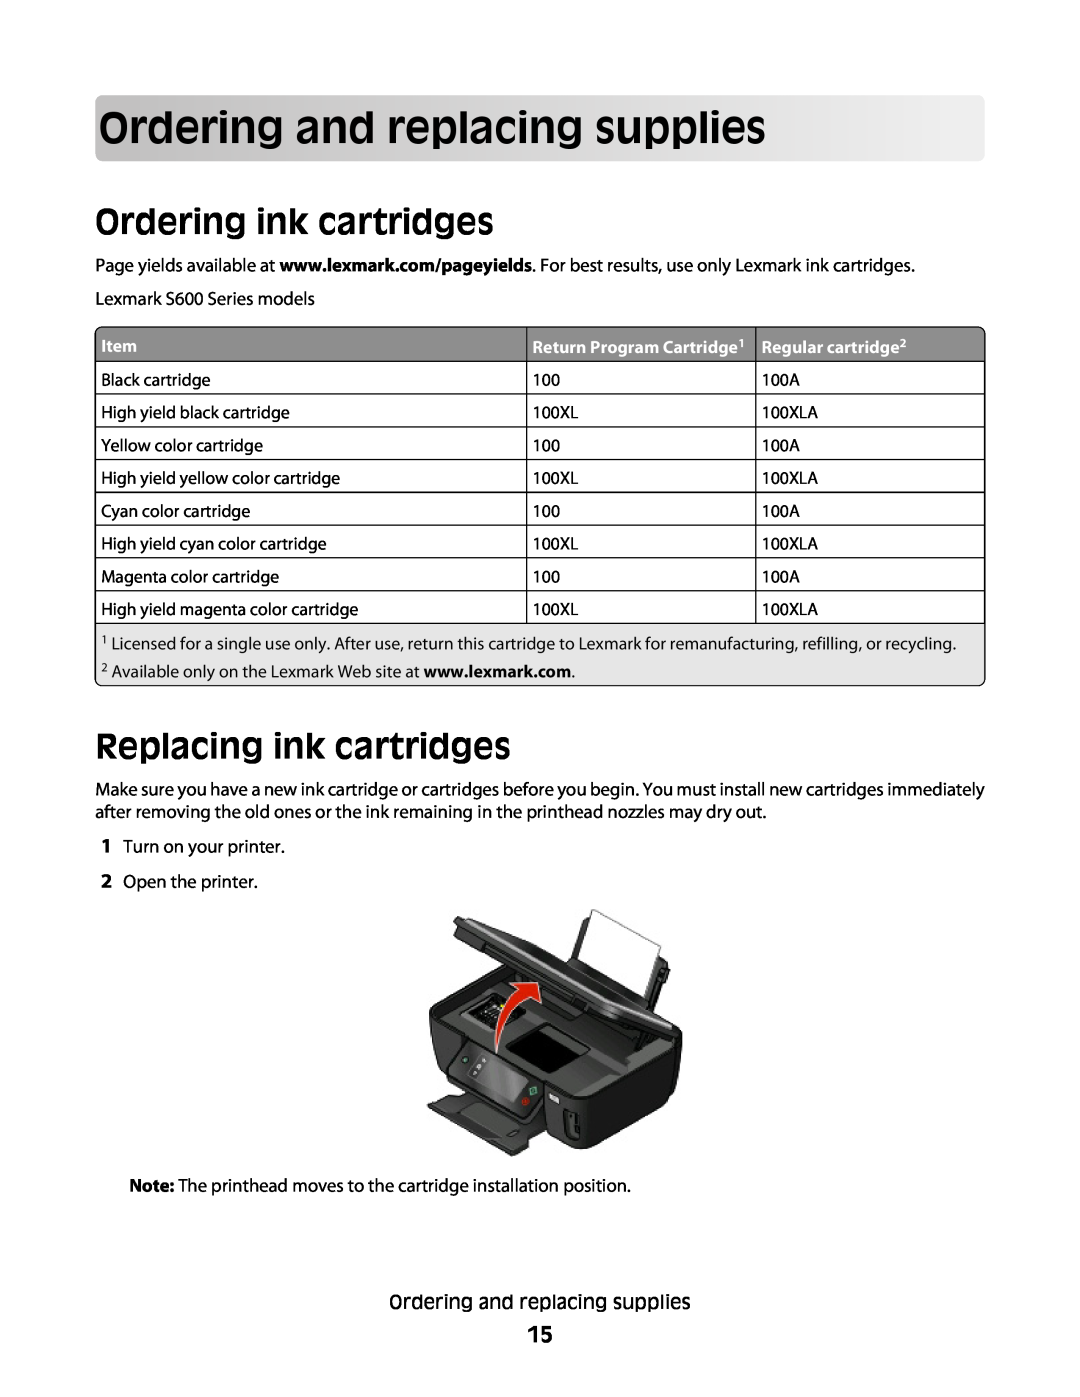 Lexmark S600 manual Orderin gand replacingsupplies, Ordering ink cartridges, Replacing ink cartridges 